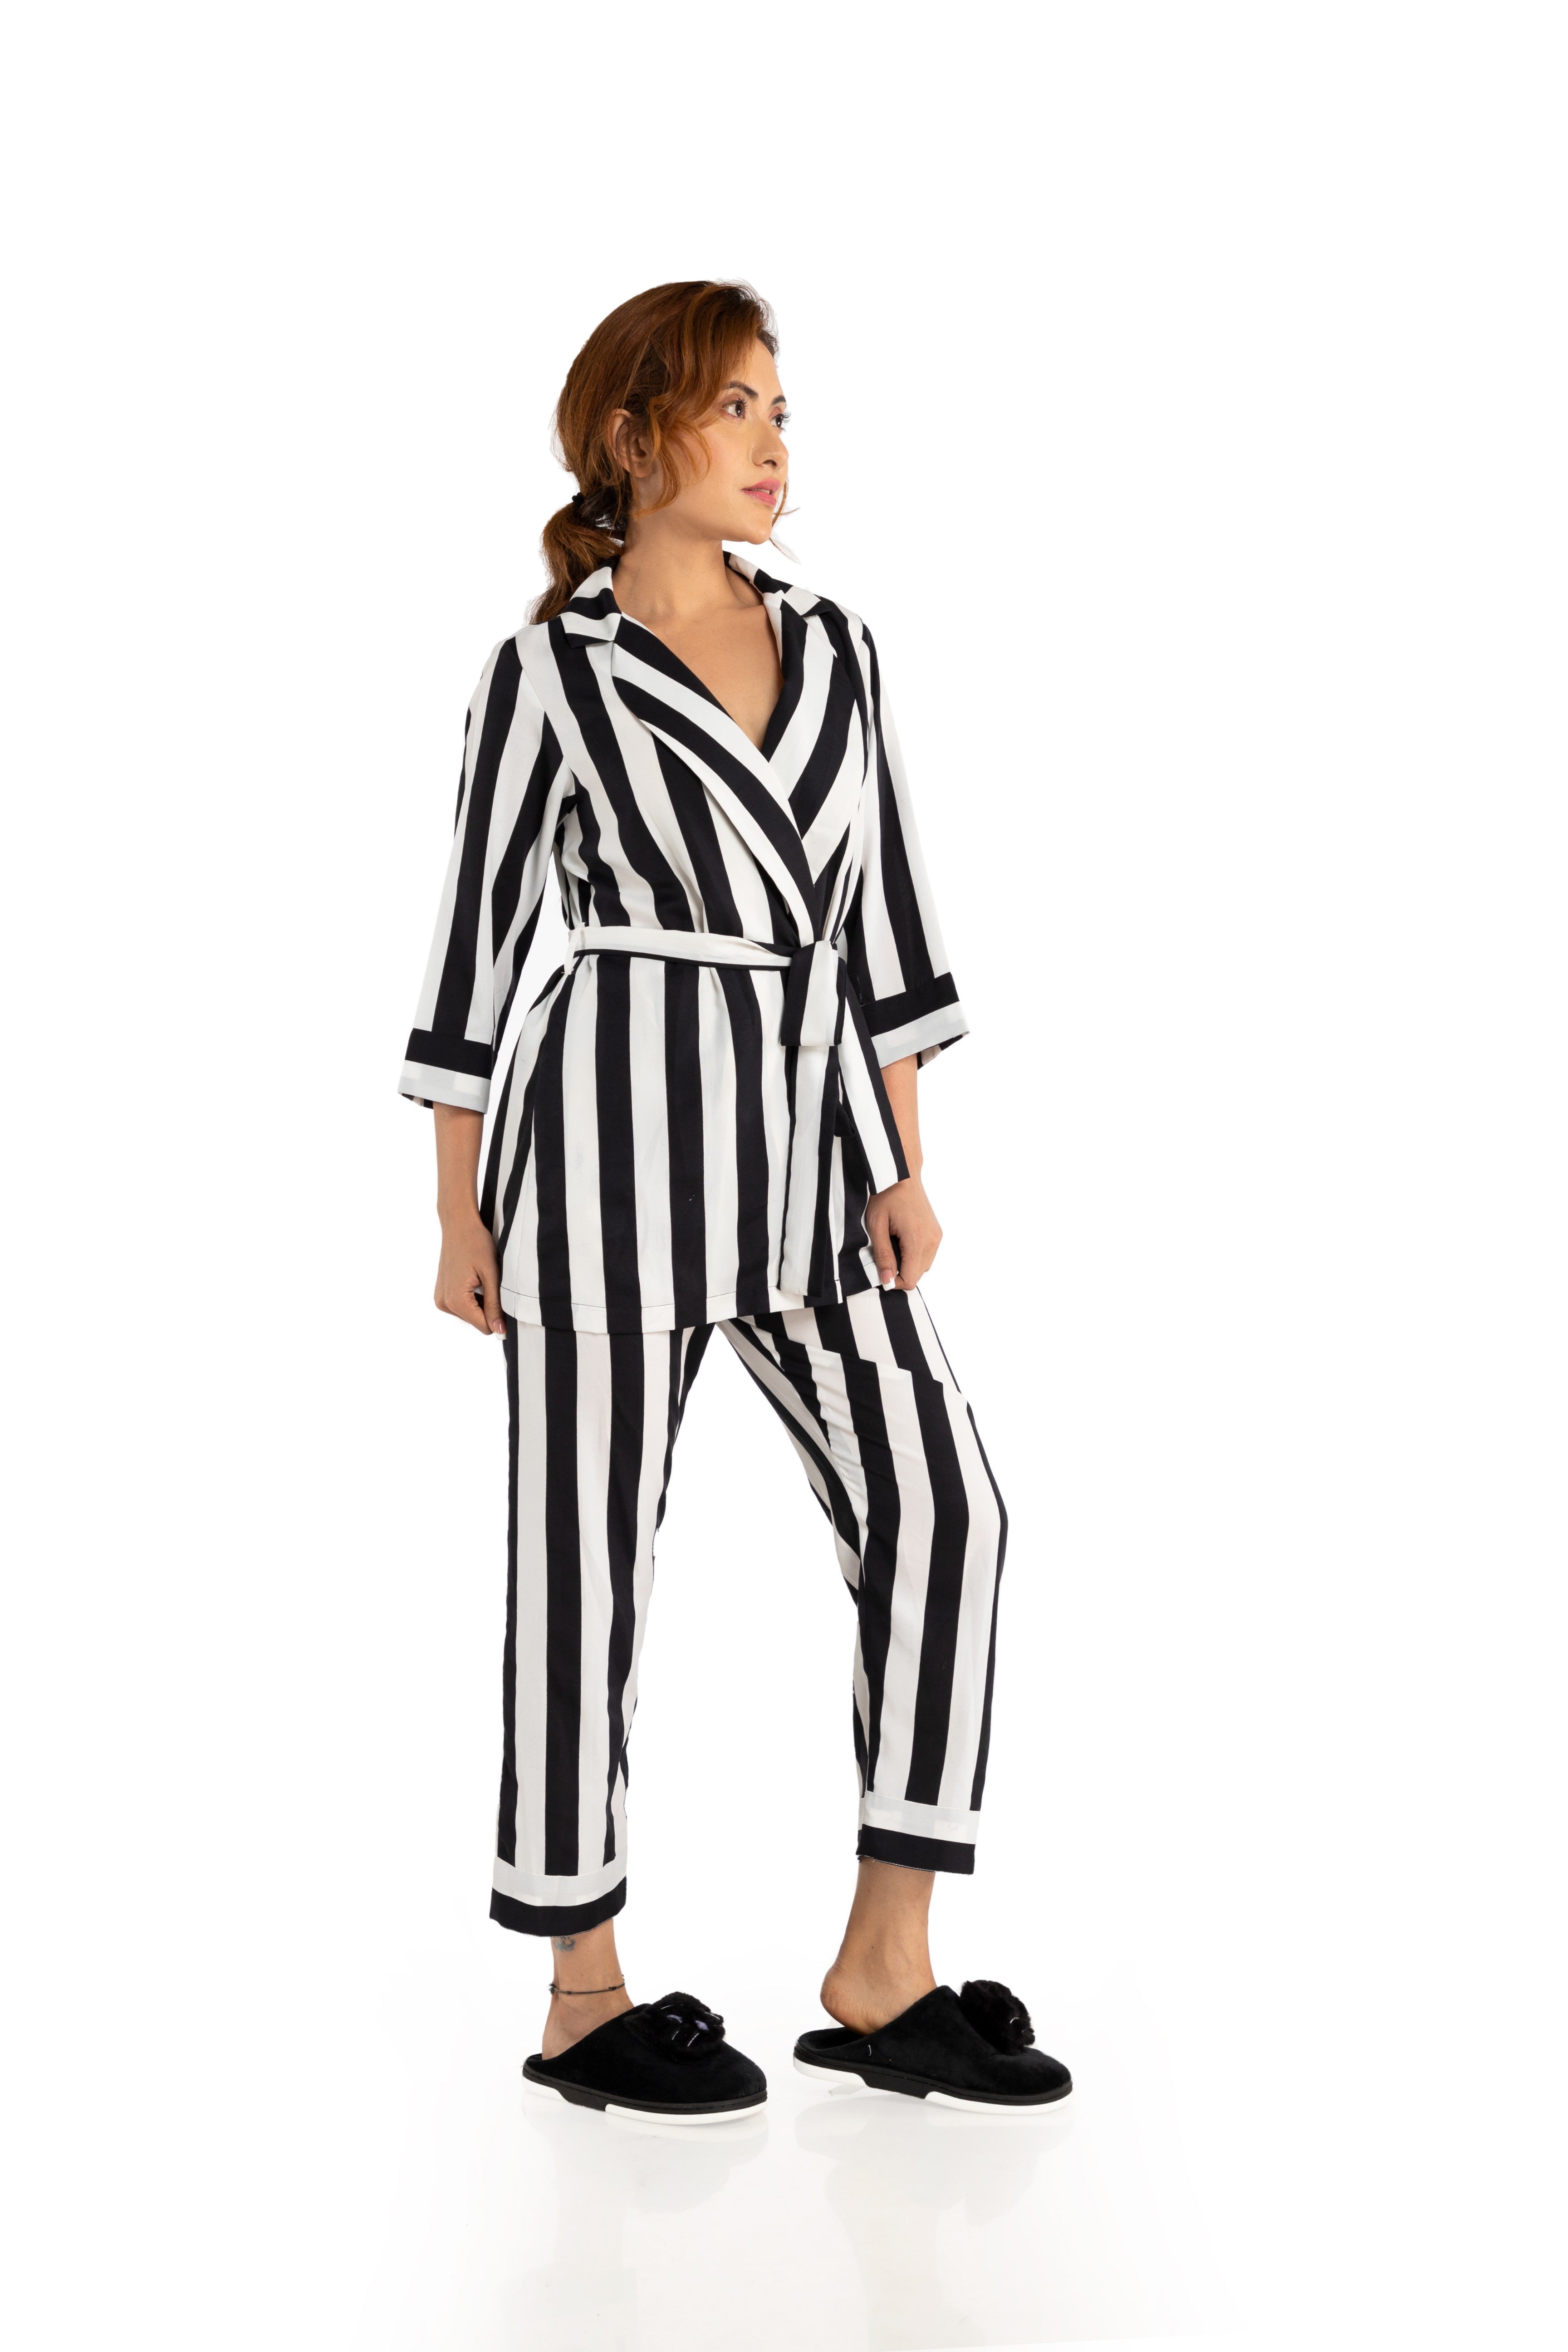 Black And White Stripes Nightwear Set